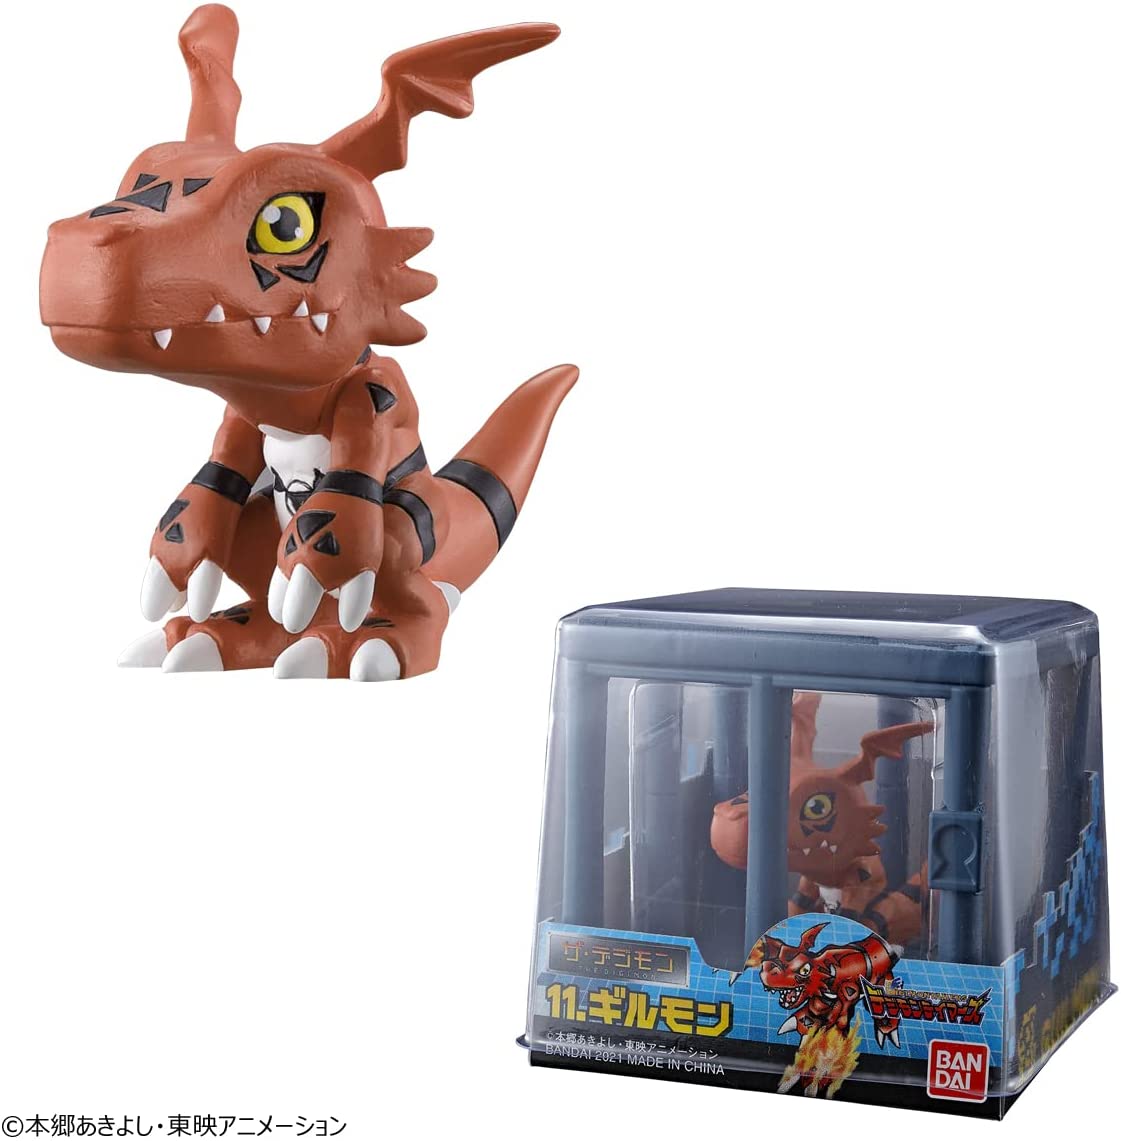 Digimon Figure Set: The Digimon Vol.2 (Premium Bandai Exclusive)